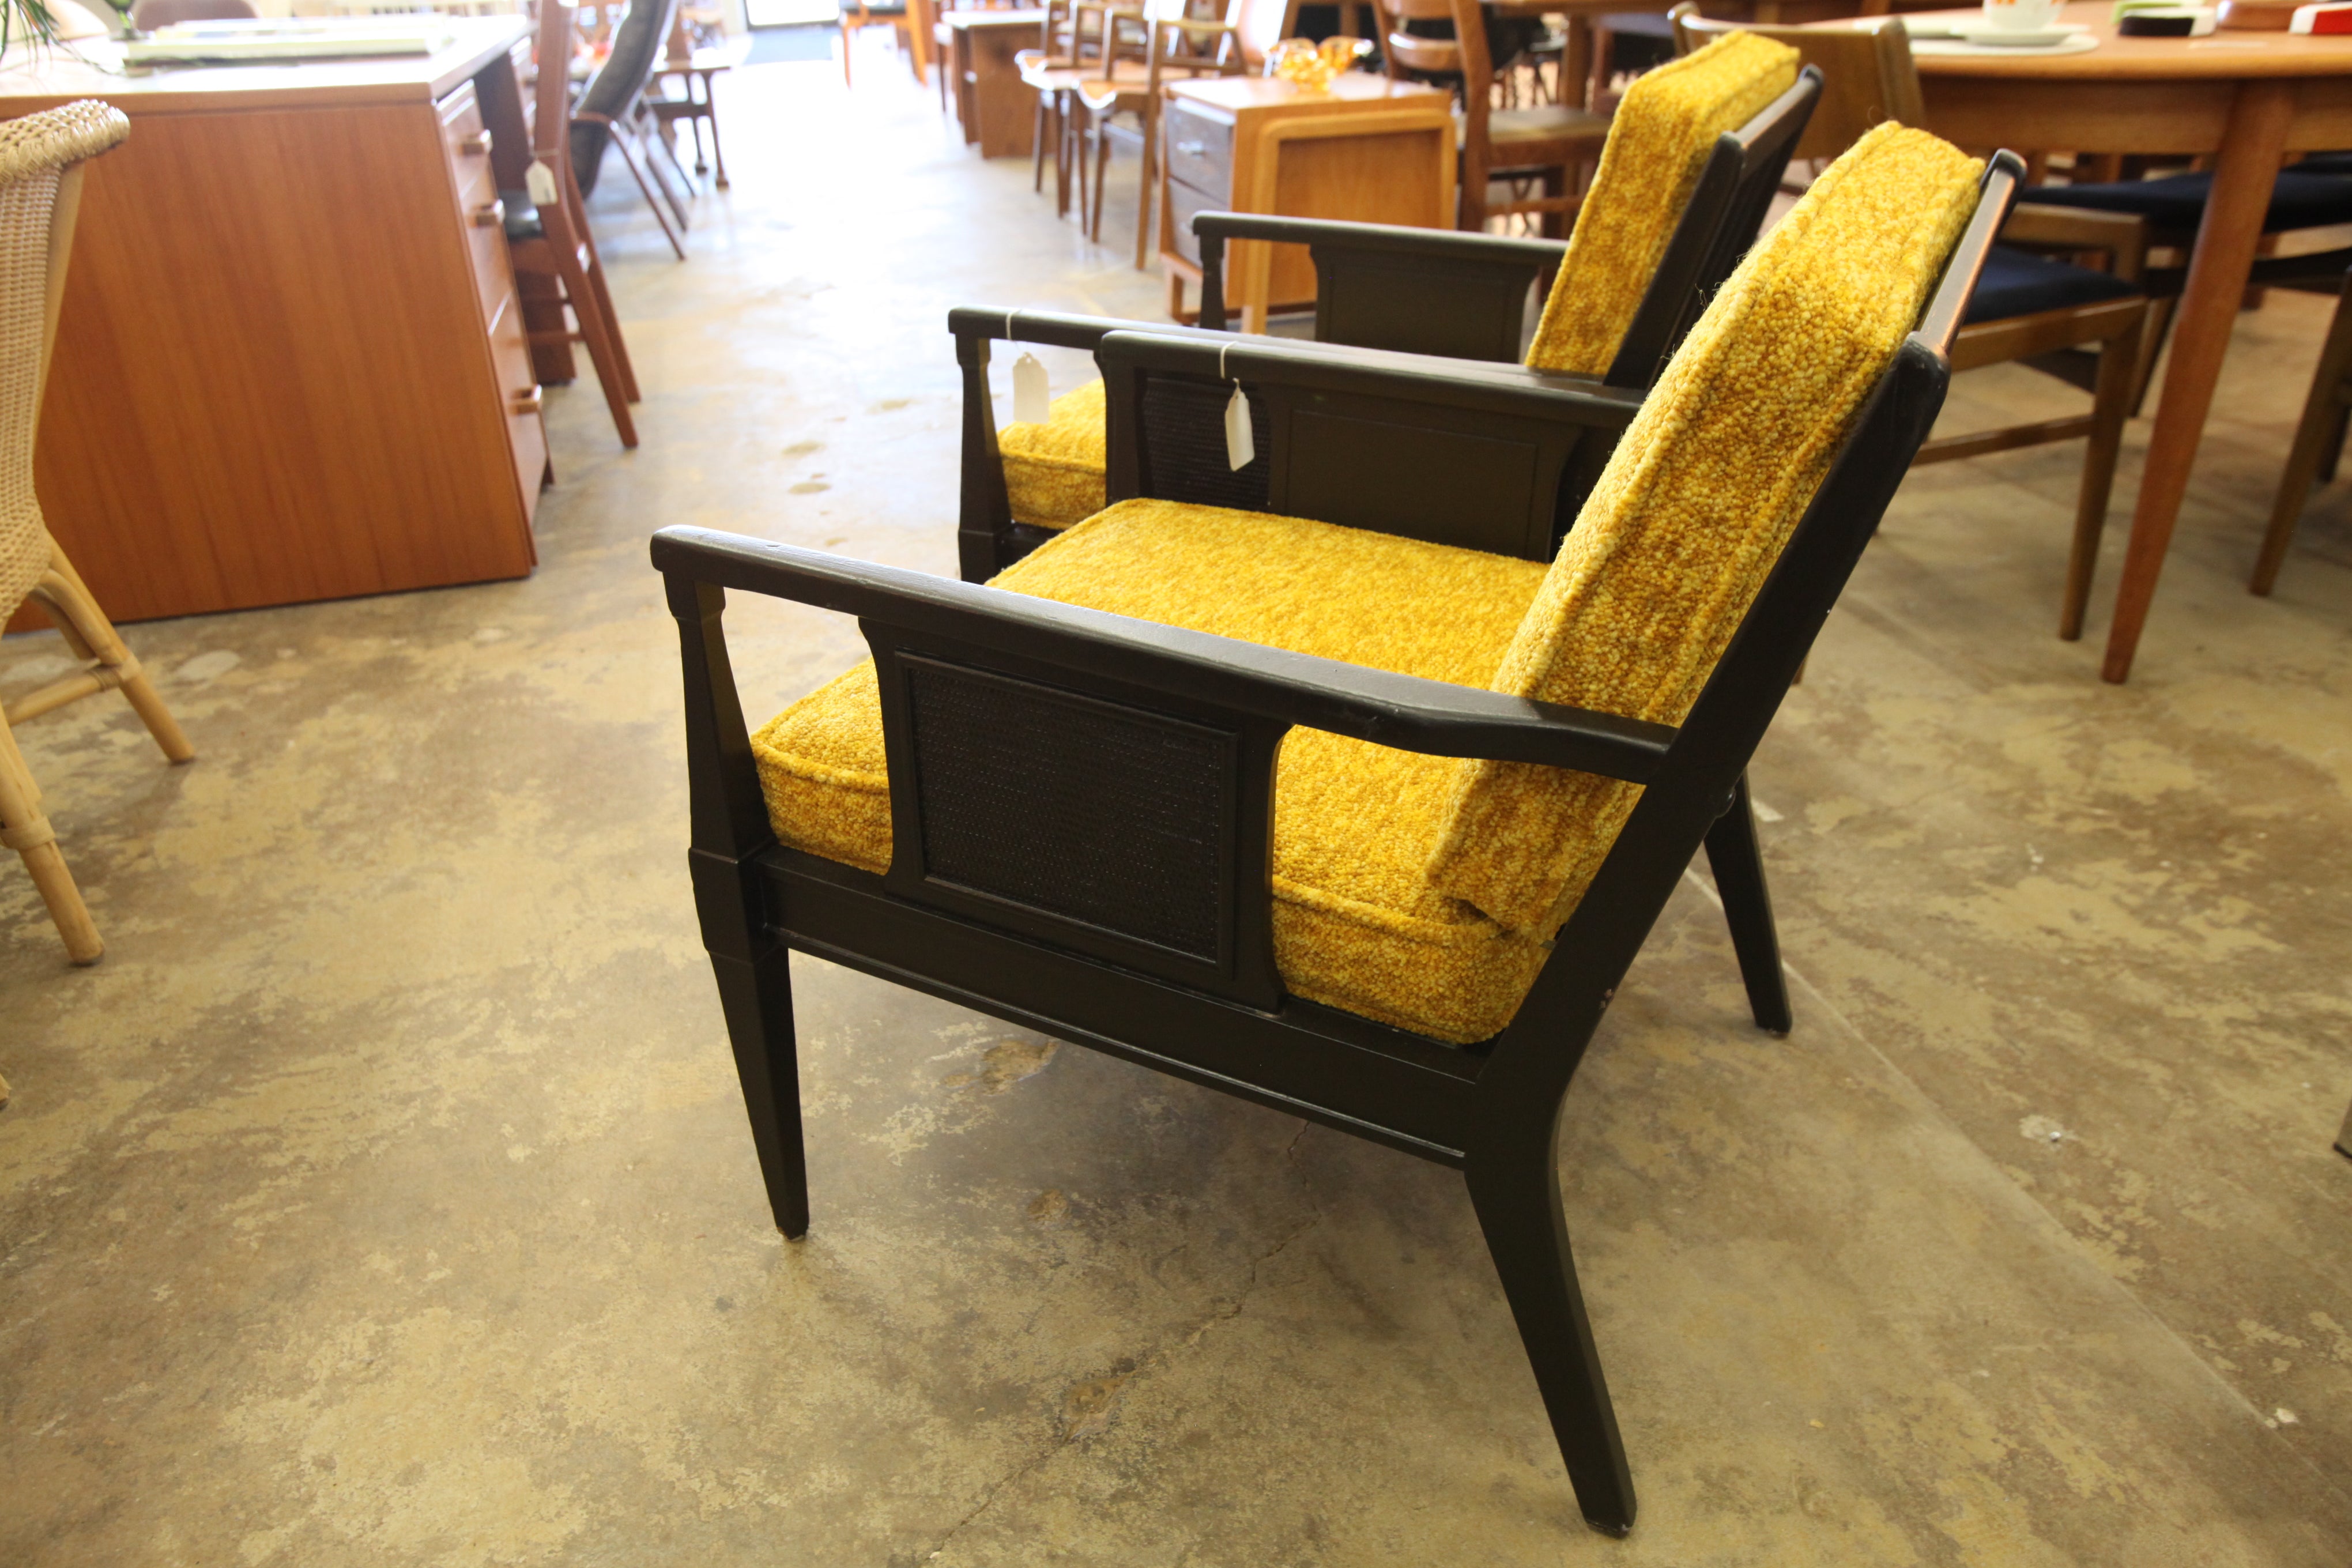 Vintage (Painted Black) Lounge Chair (25"W x 29"D x 29"H)